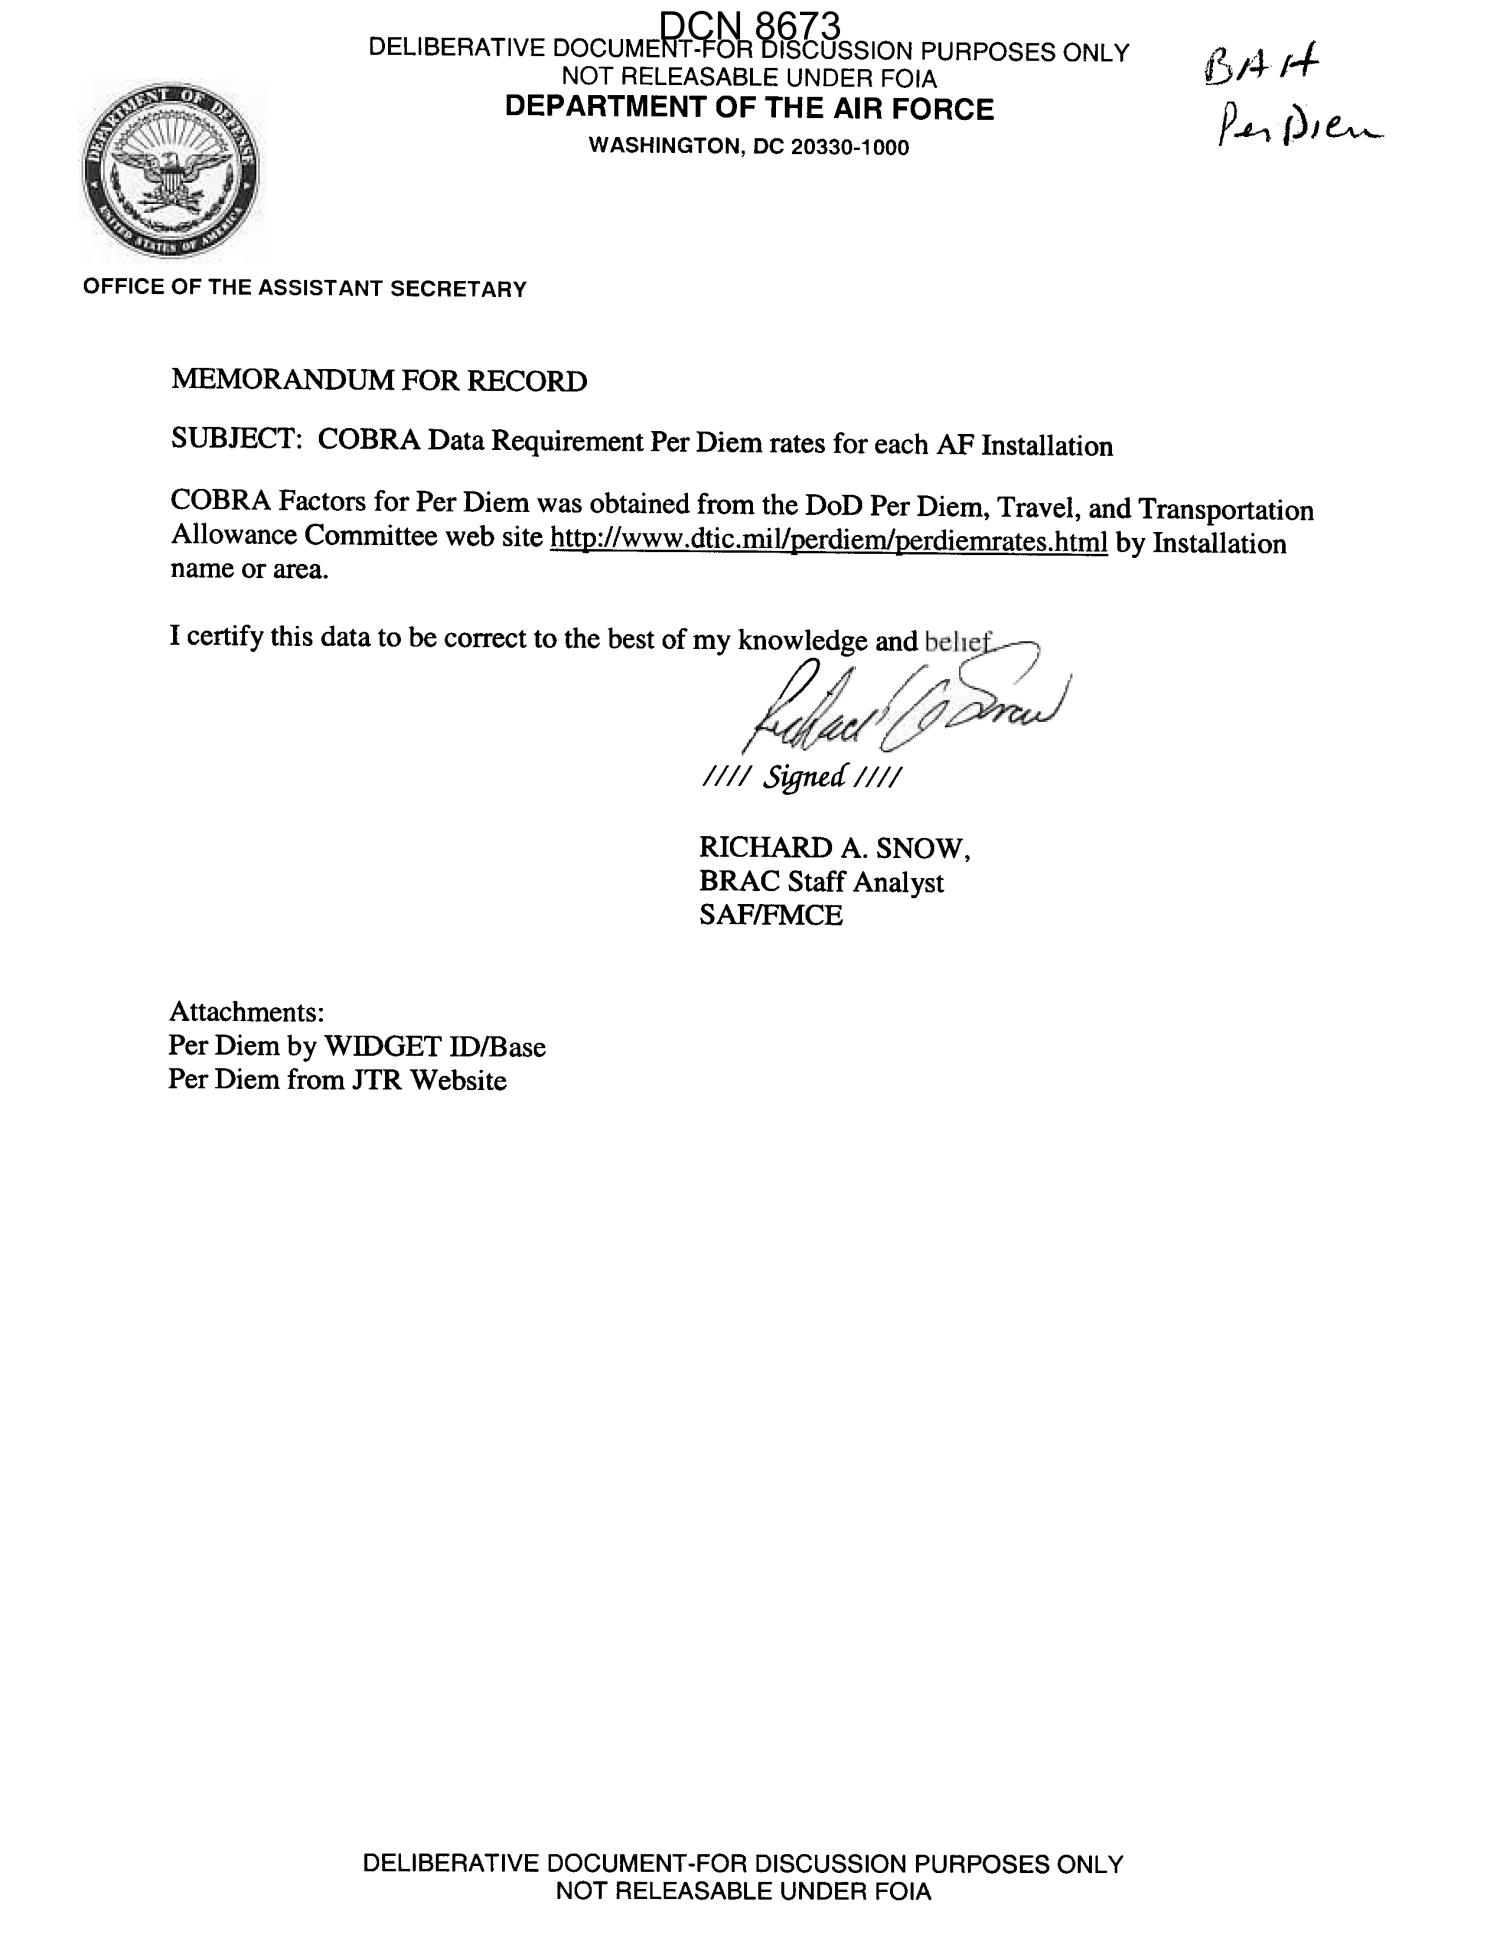 Undated Memorandum for Record from Richard Snow, BRAC Staff Analyst SAF